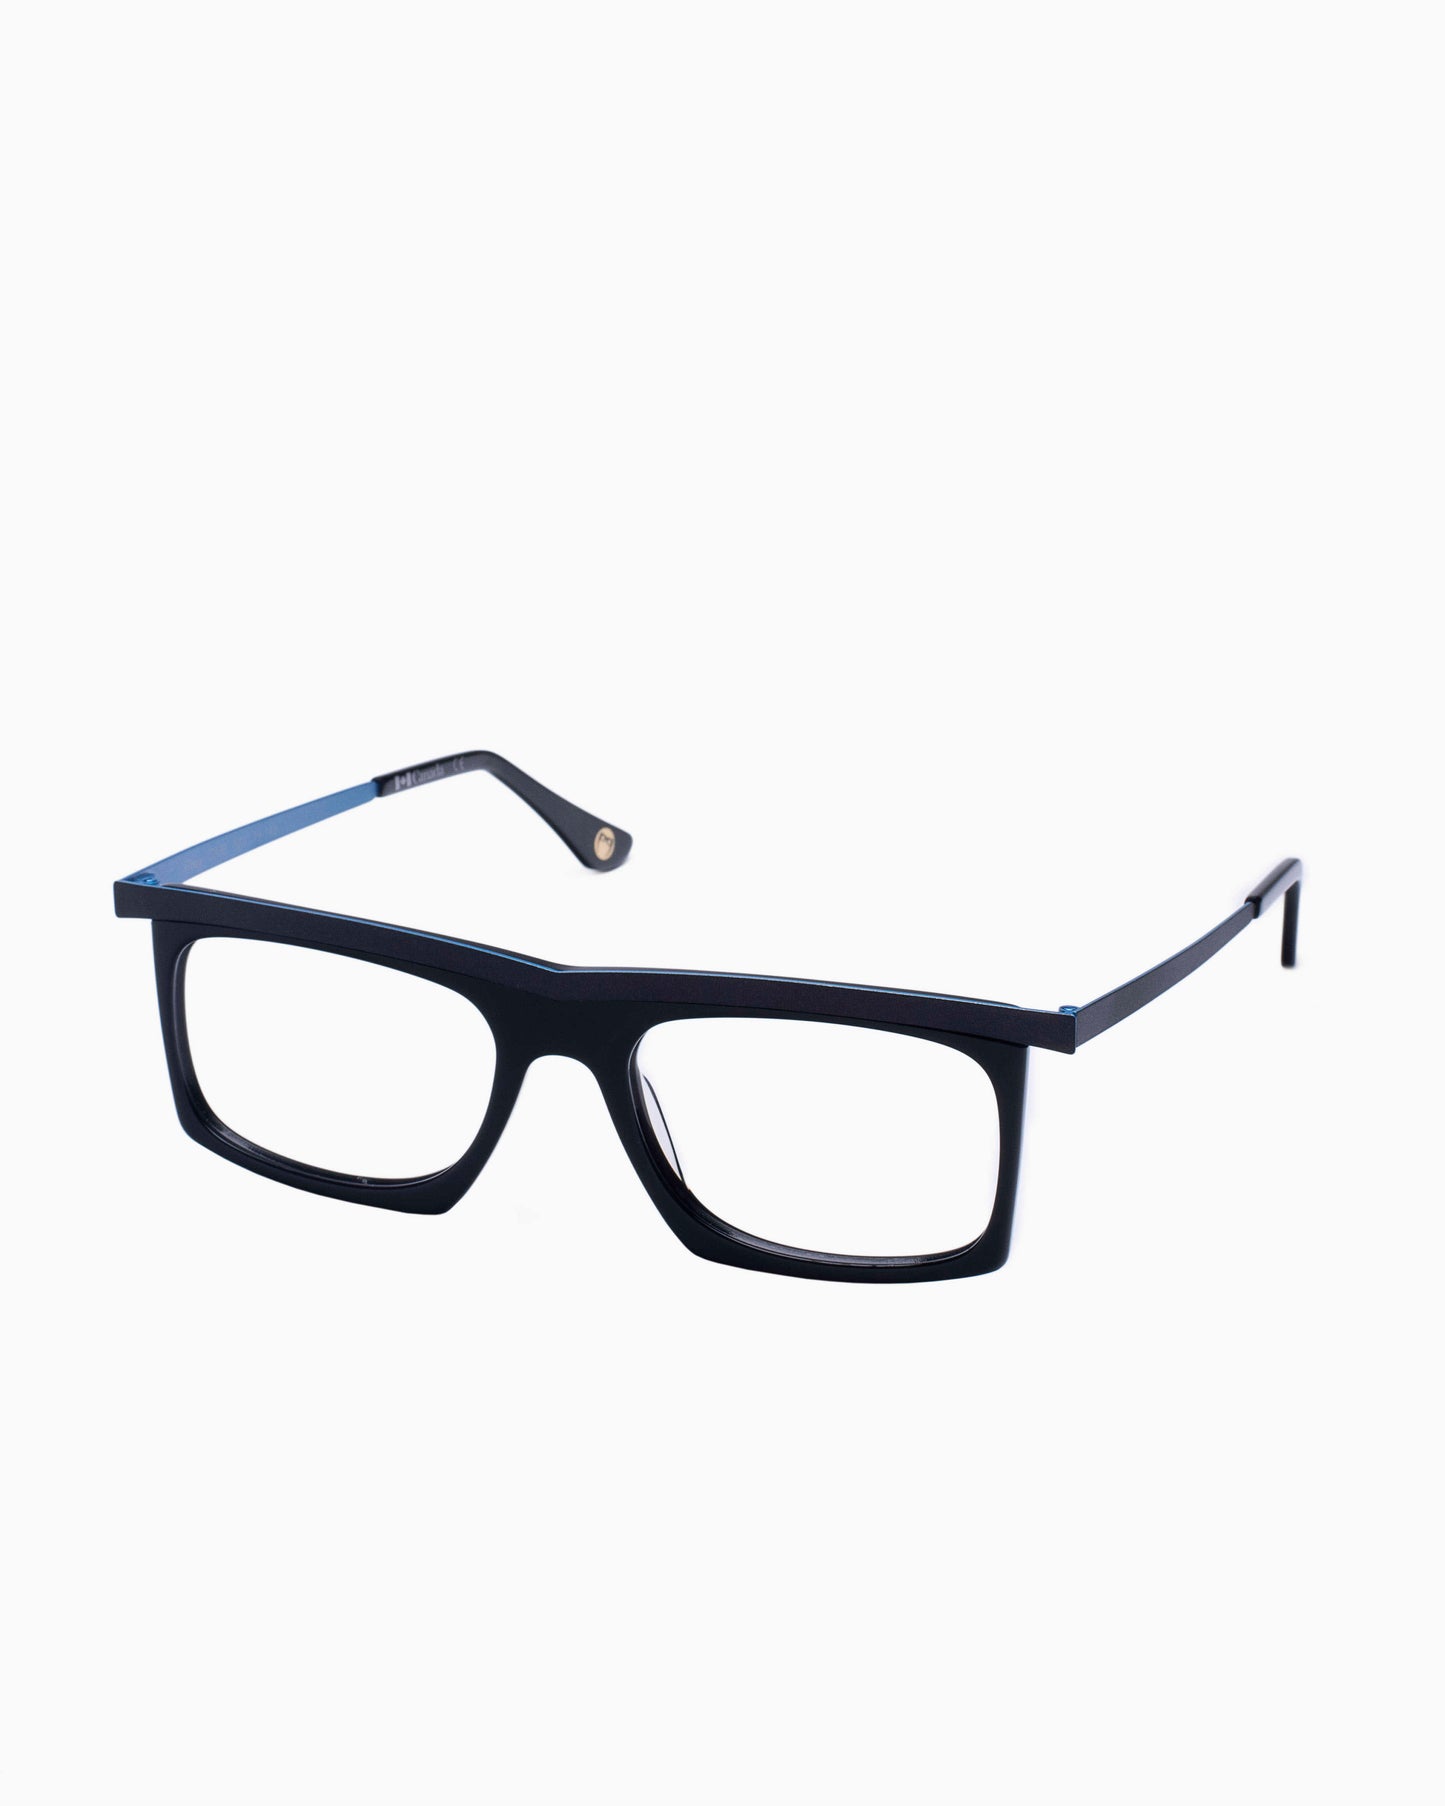 Spectacleeyeworks - Doug - C870 | glasses bar